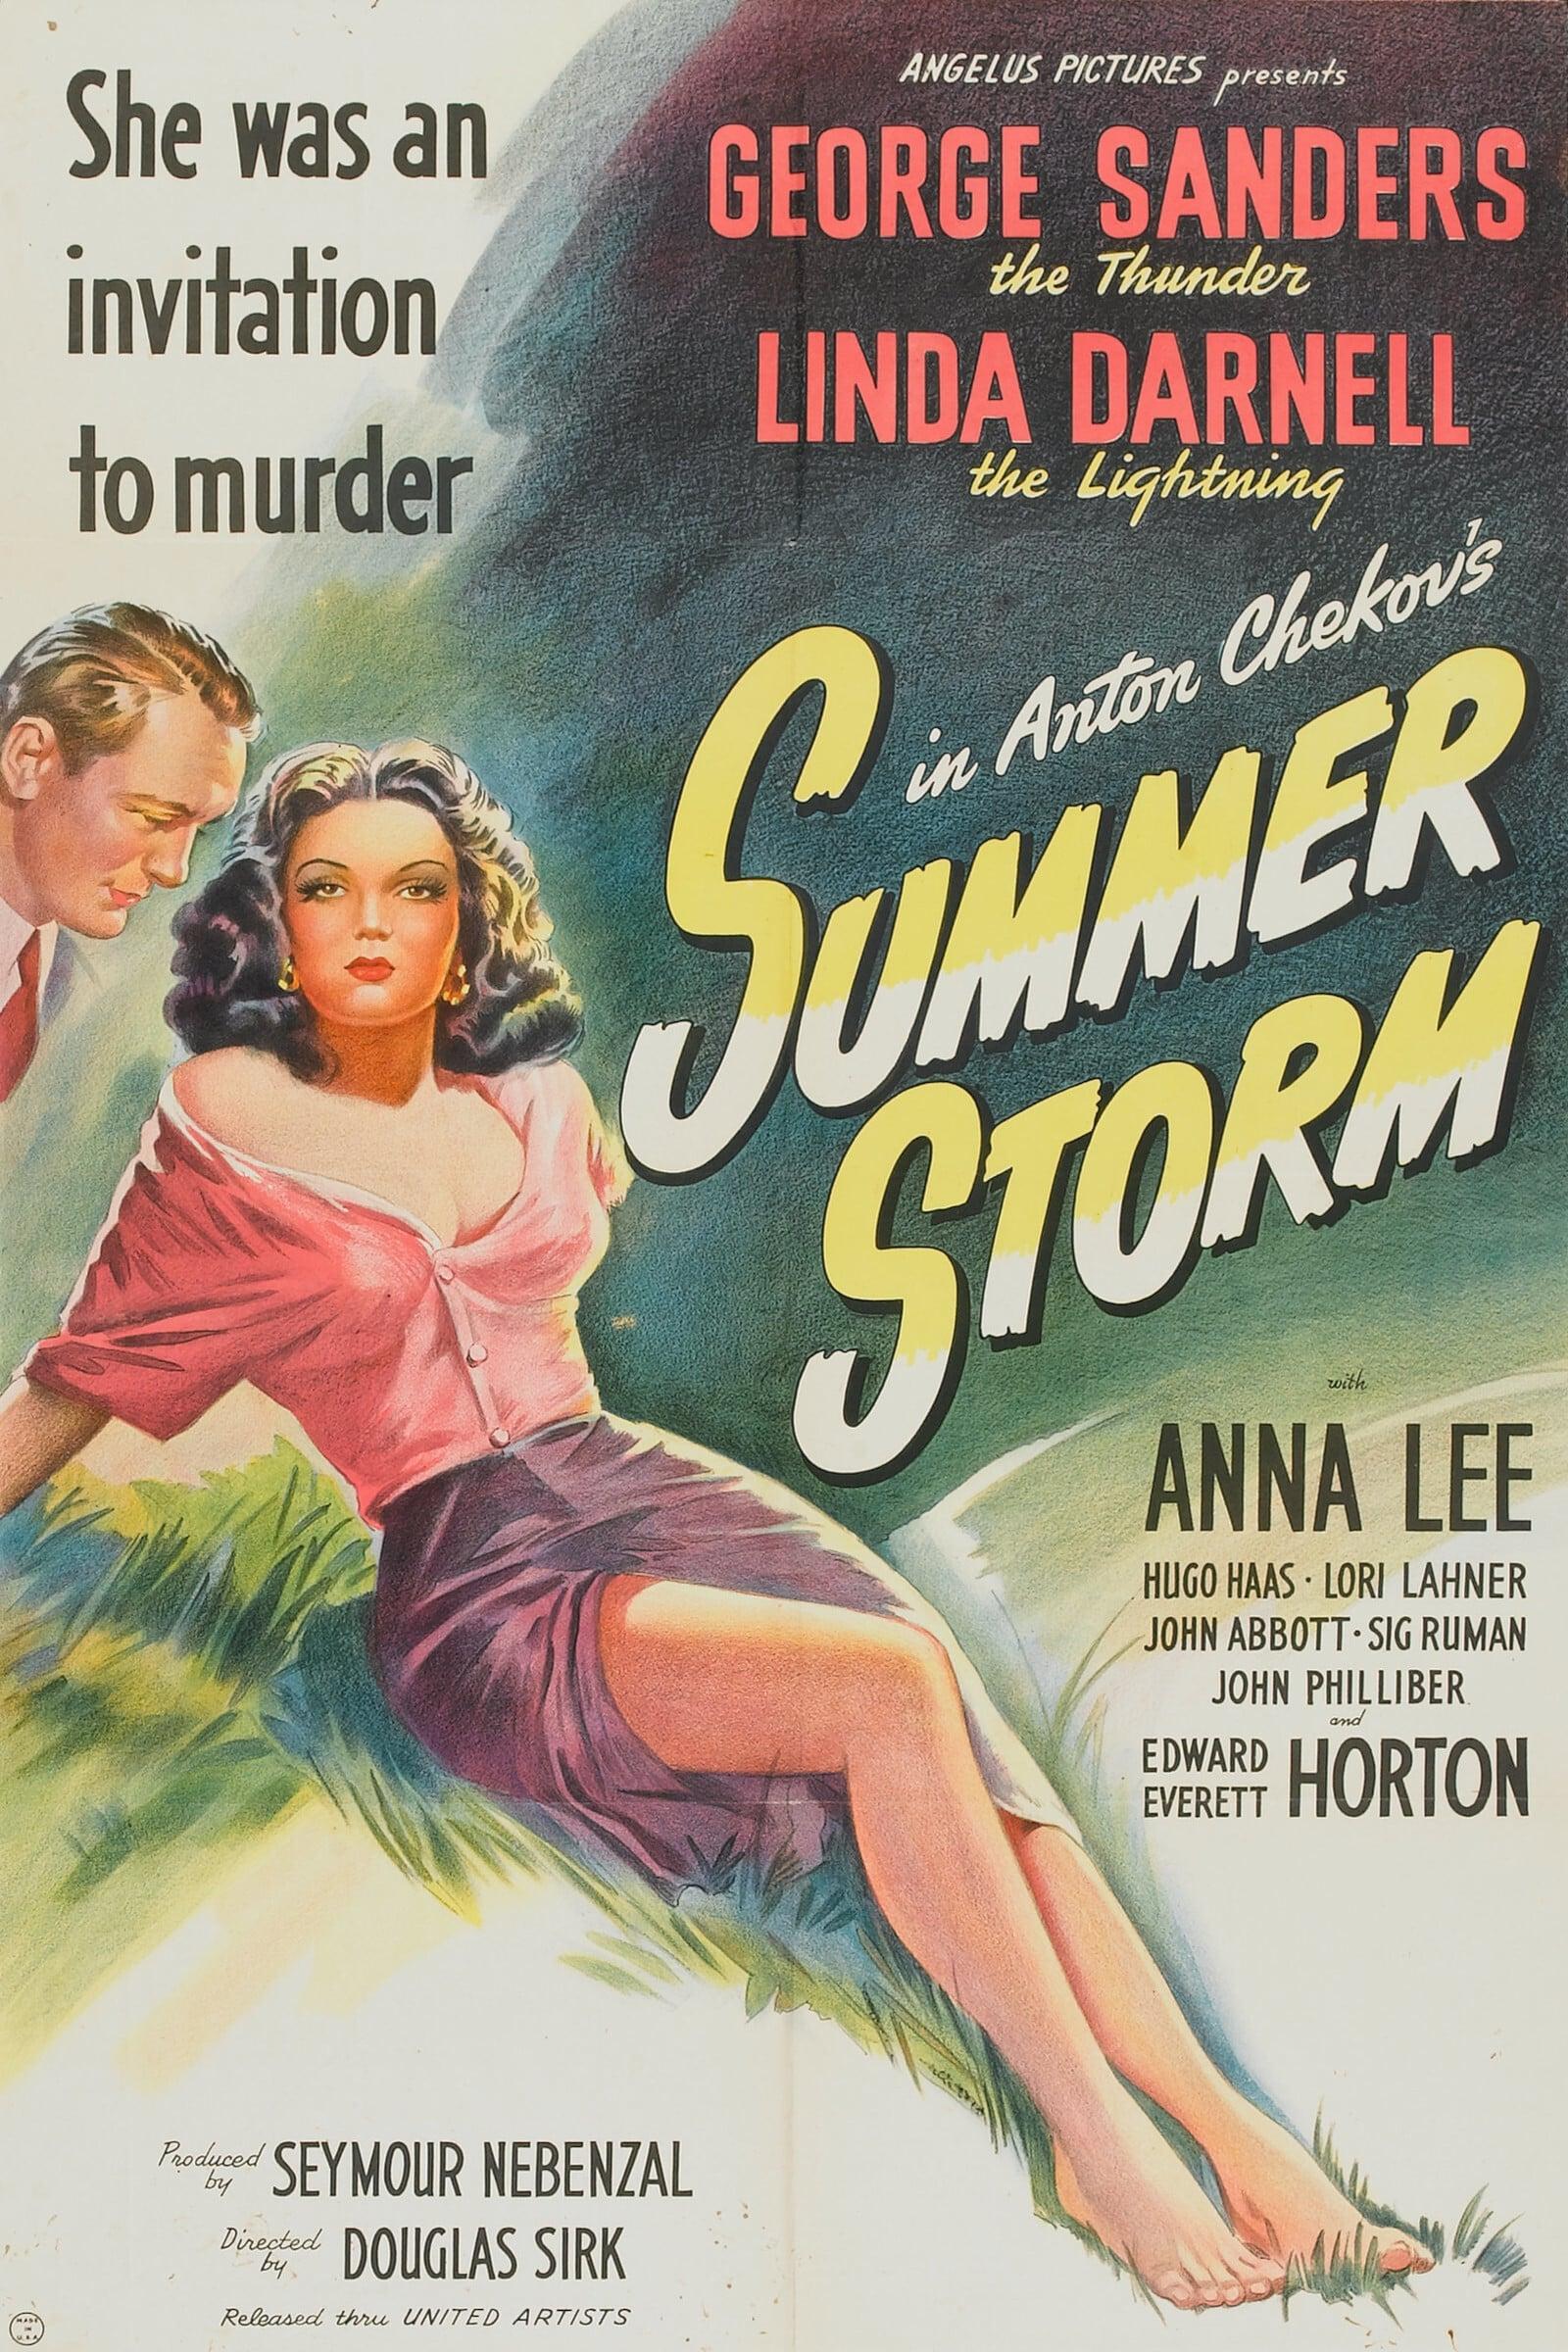 Summer Storm poster